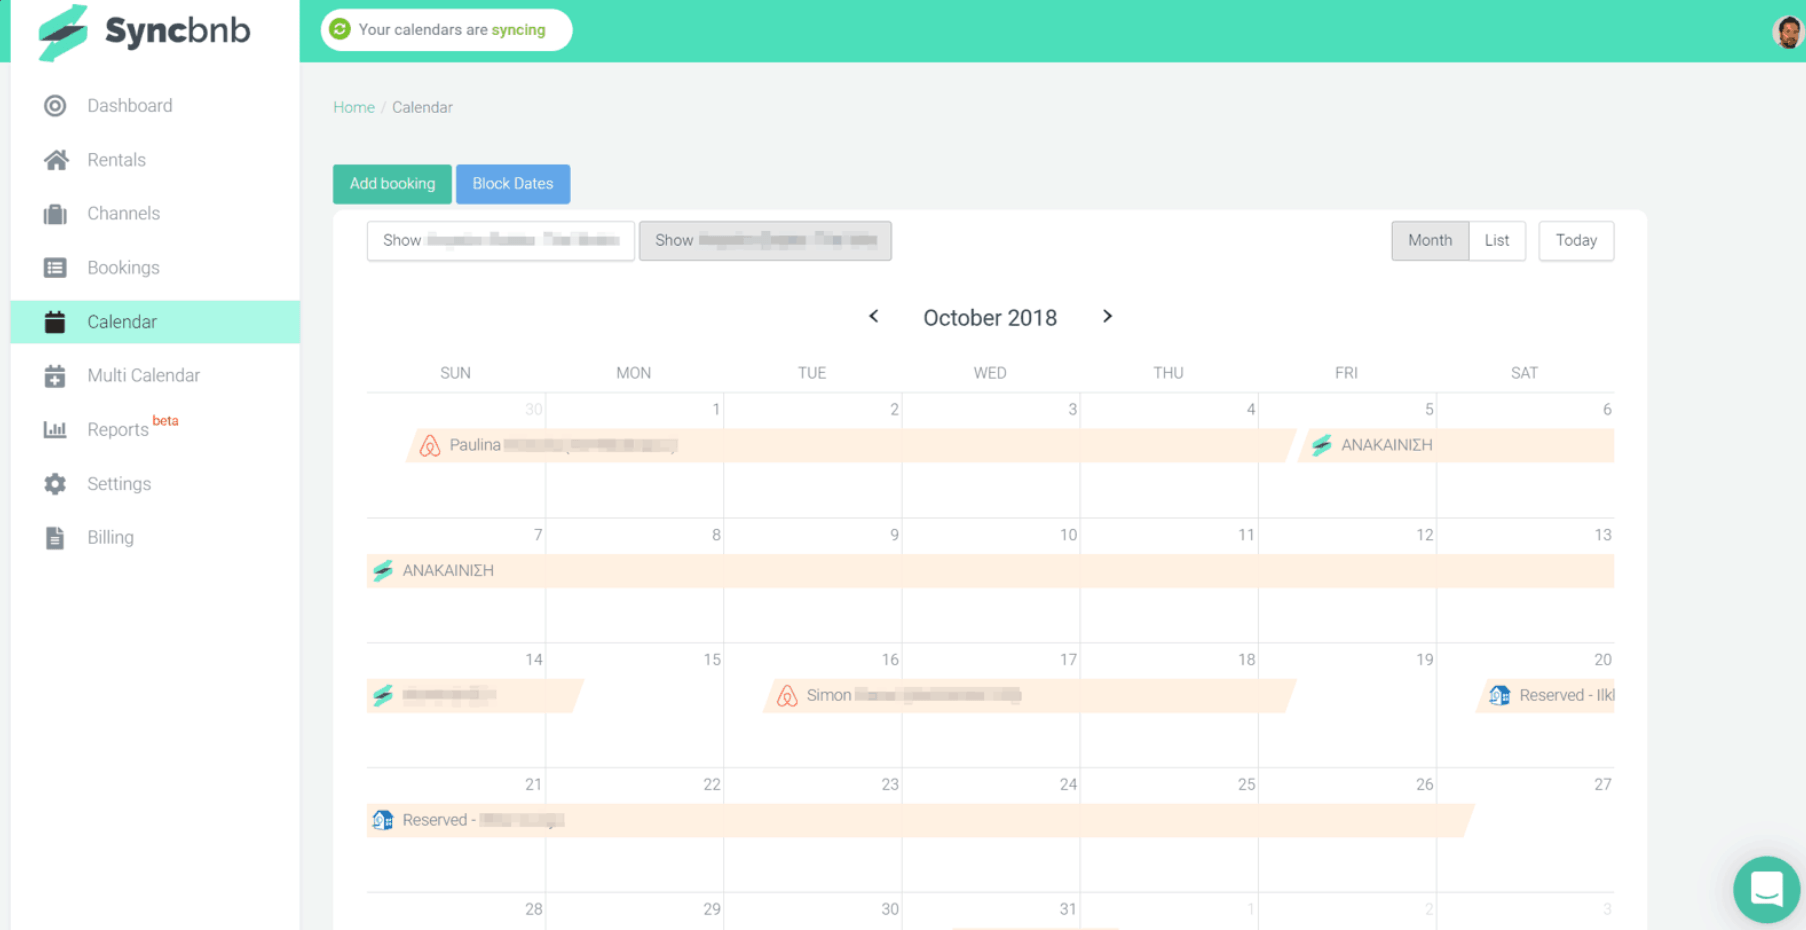 Syncbnb calendaring functionality demo screen.